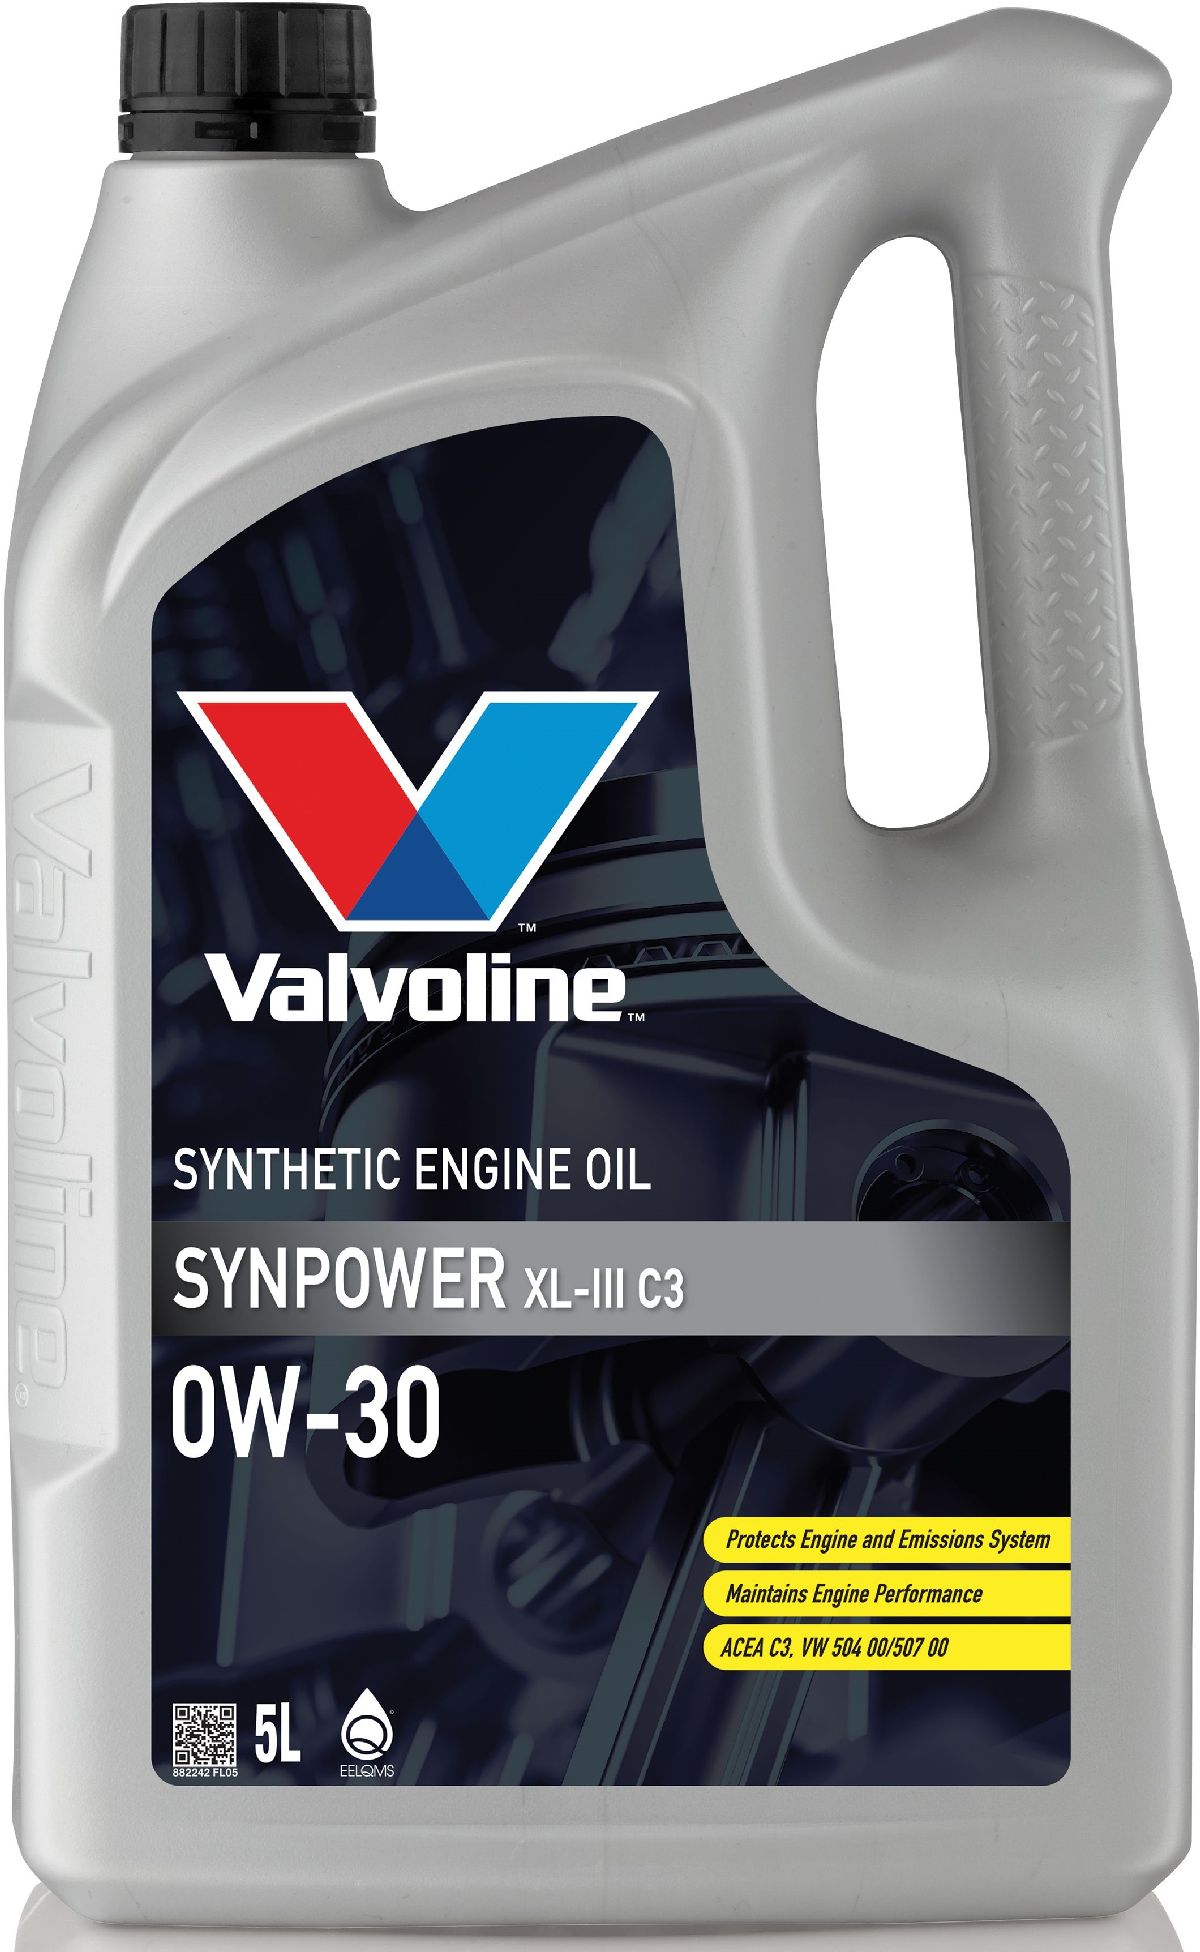 Valvoline Synpower XL-III C3 0W-30